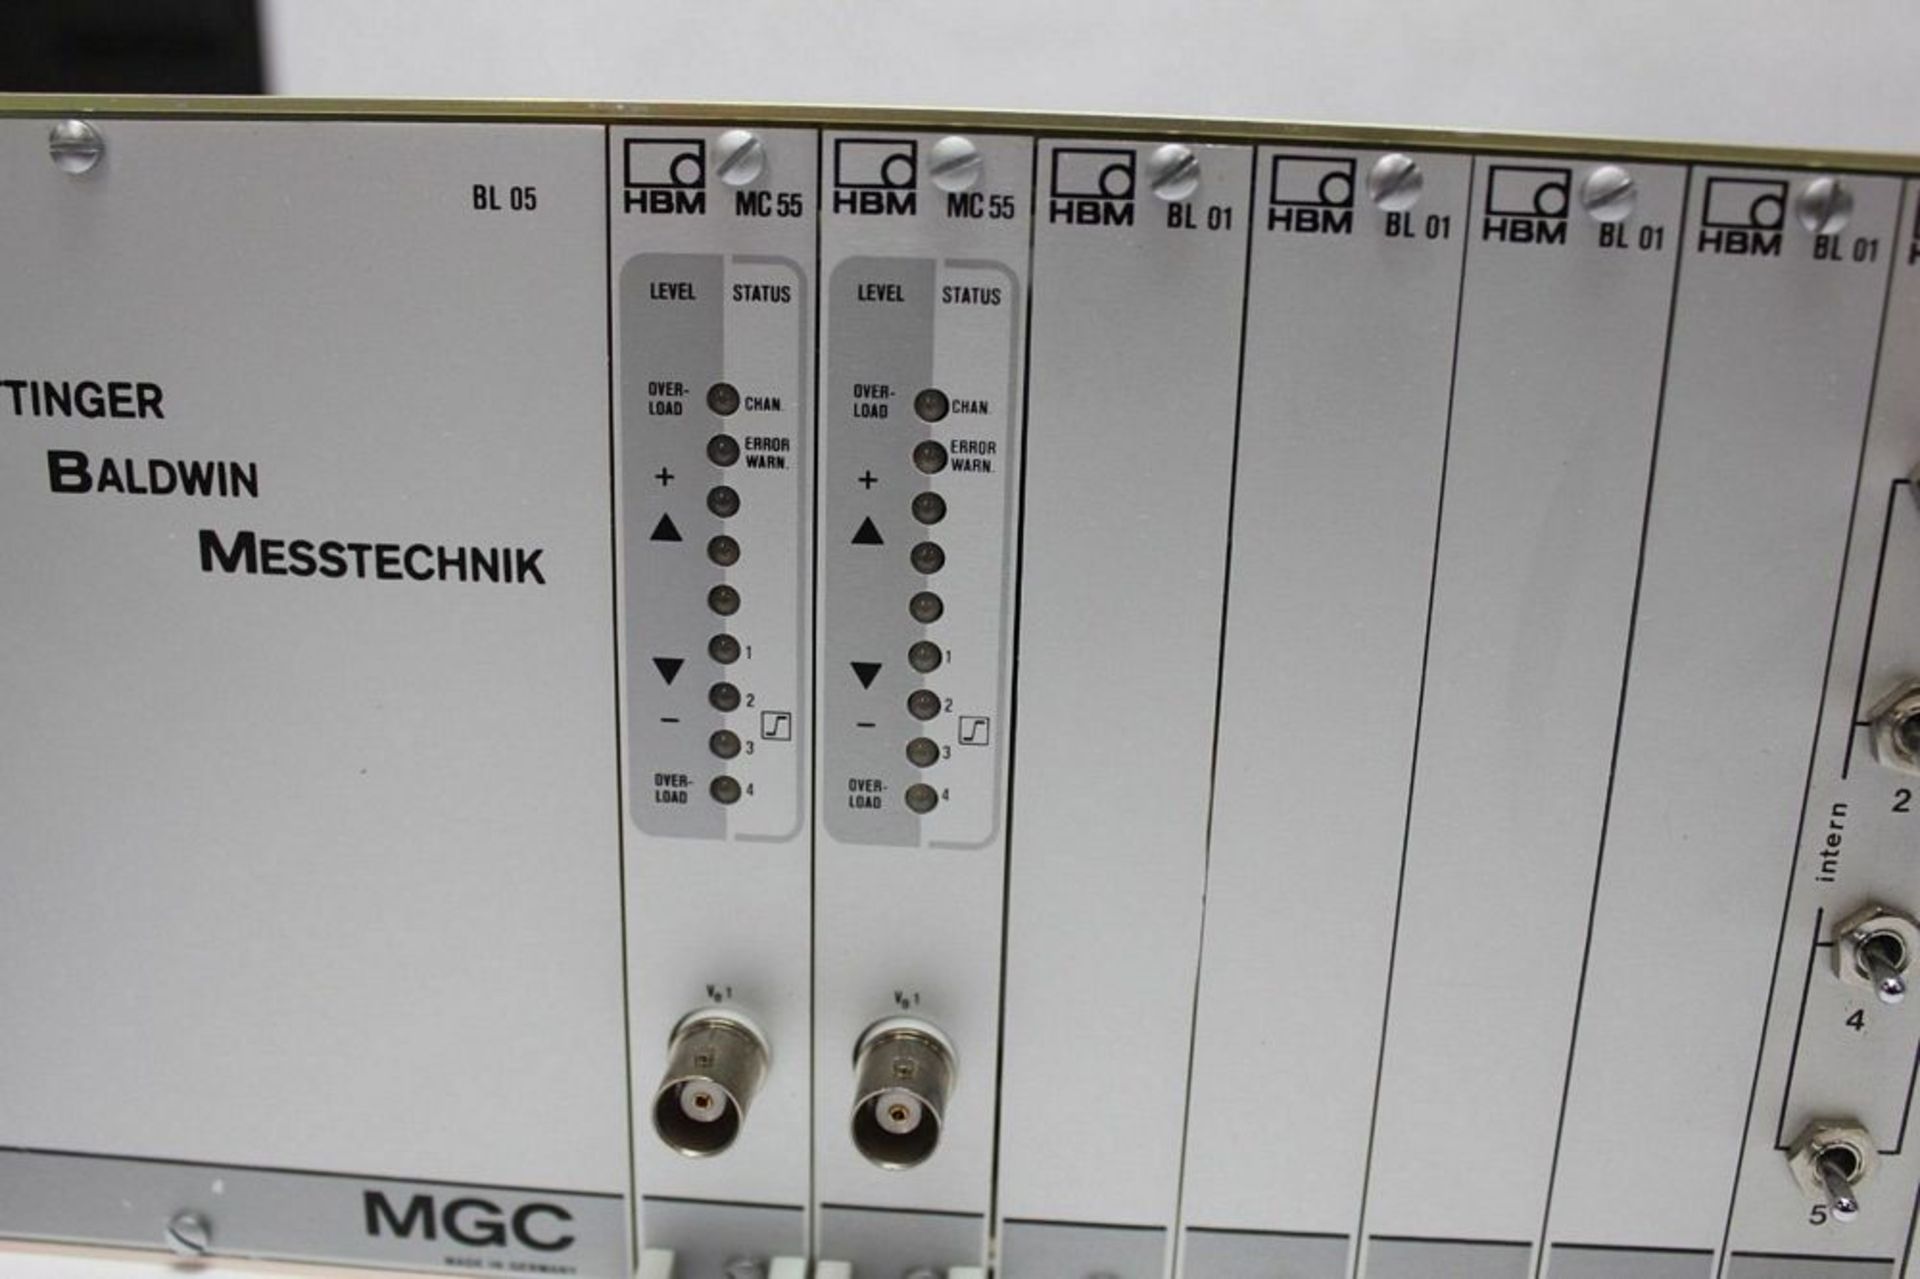 HOTTINGER BALDWIN MESSTECHNIK MGC DATA ACQUISITION RACK SYSTEM DAQ - Image 4 of 12